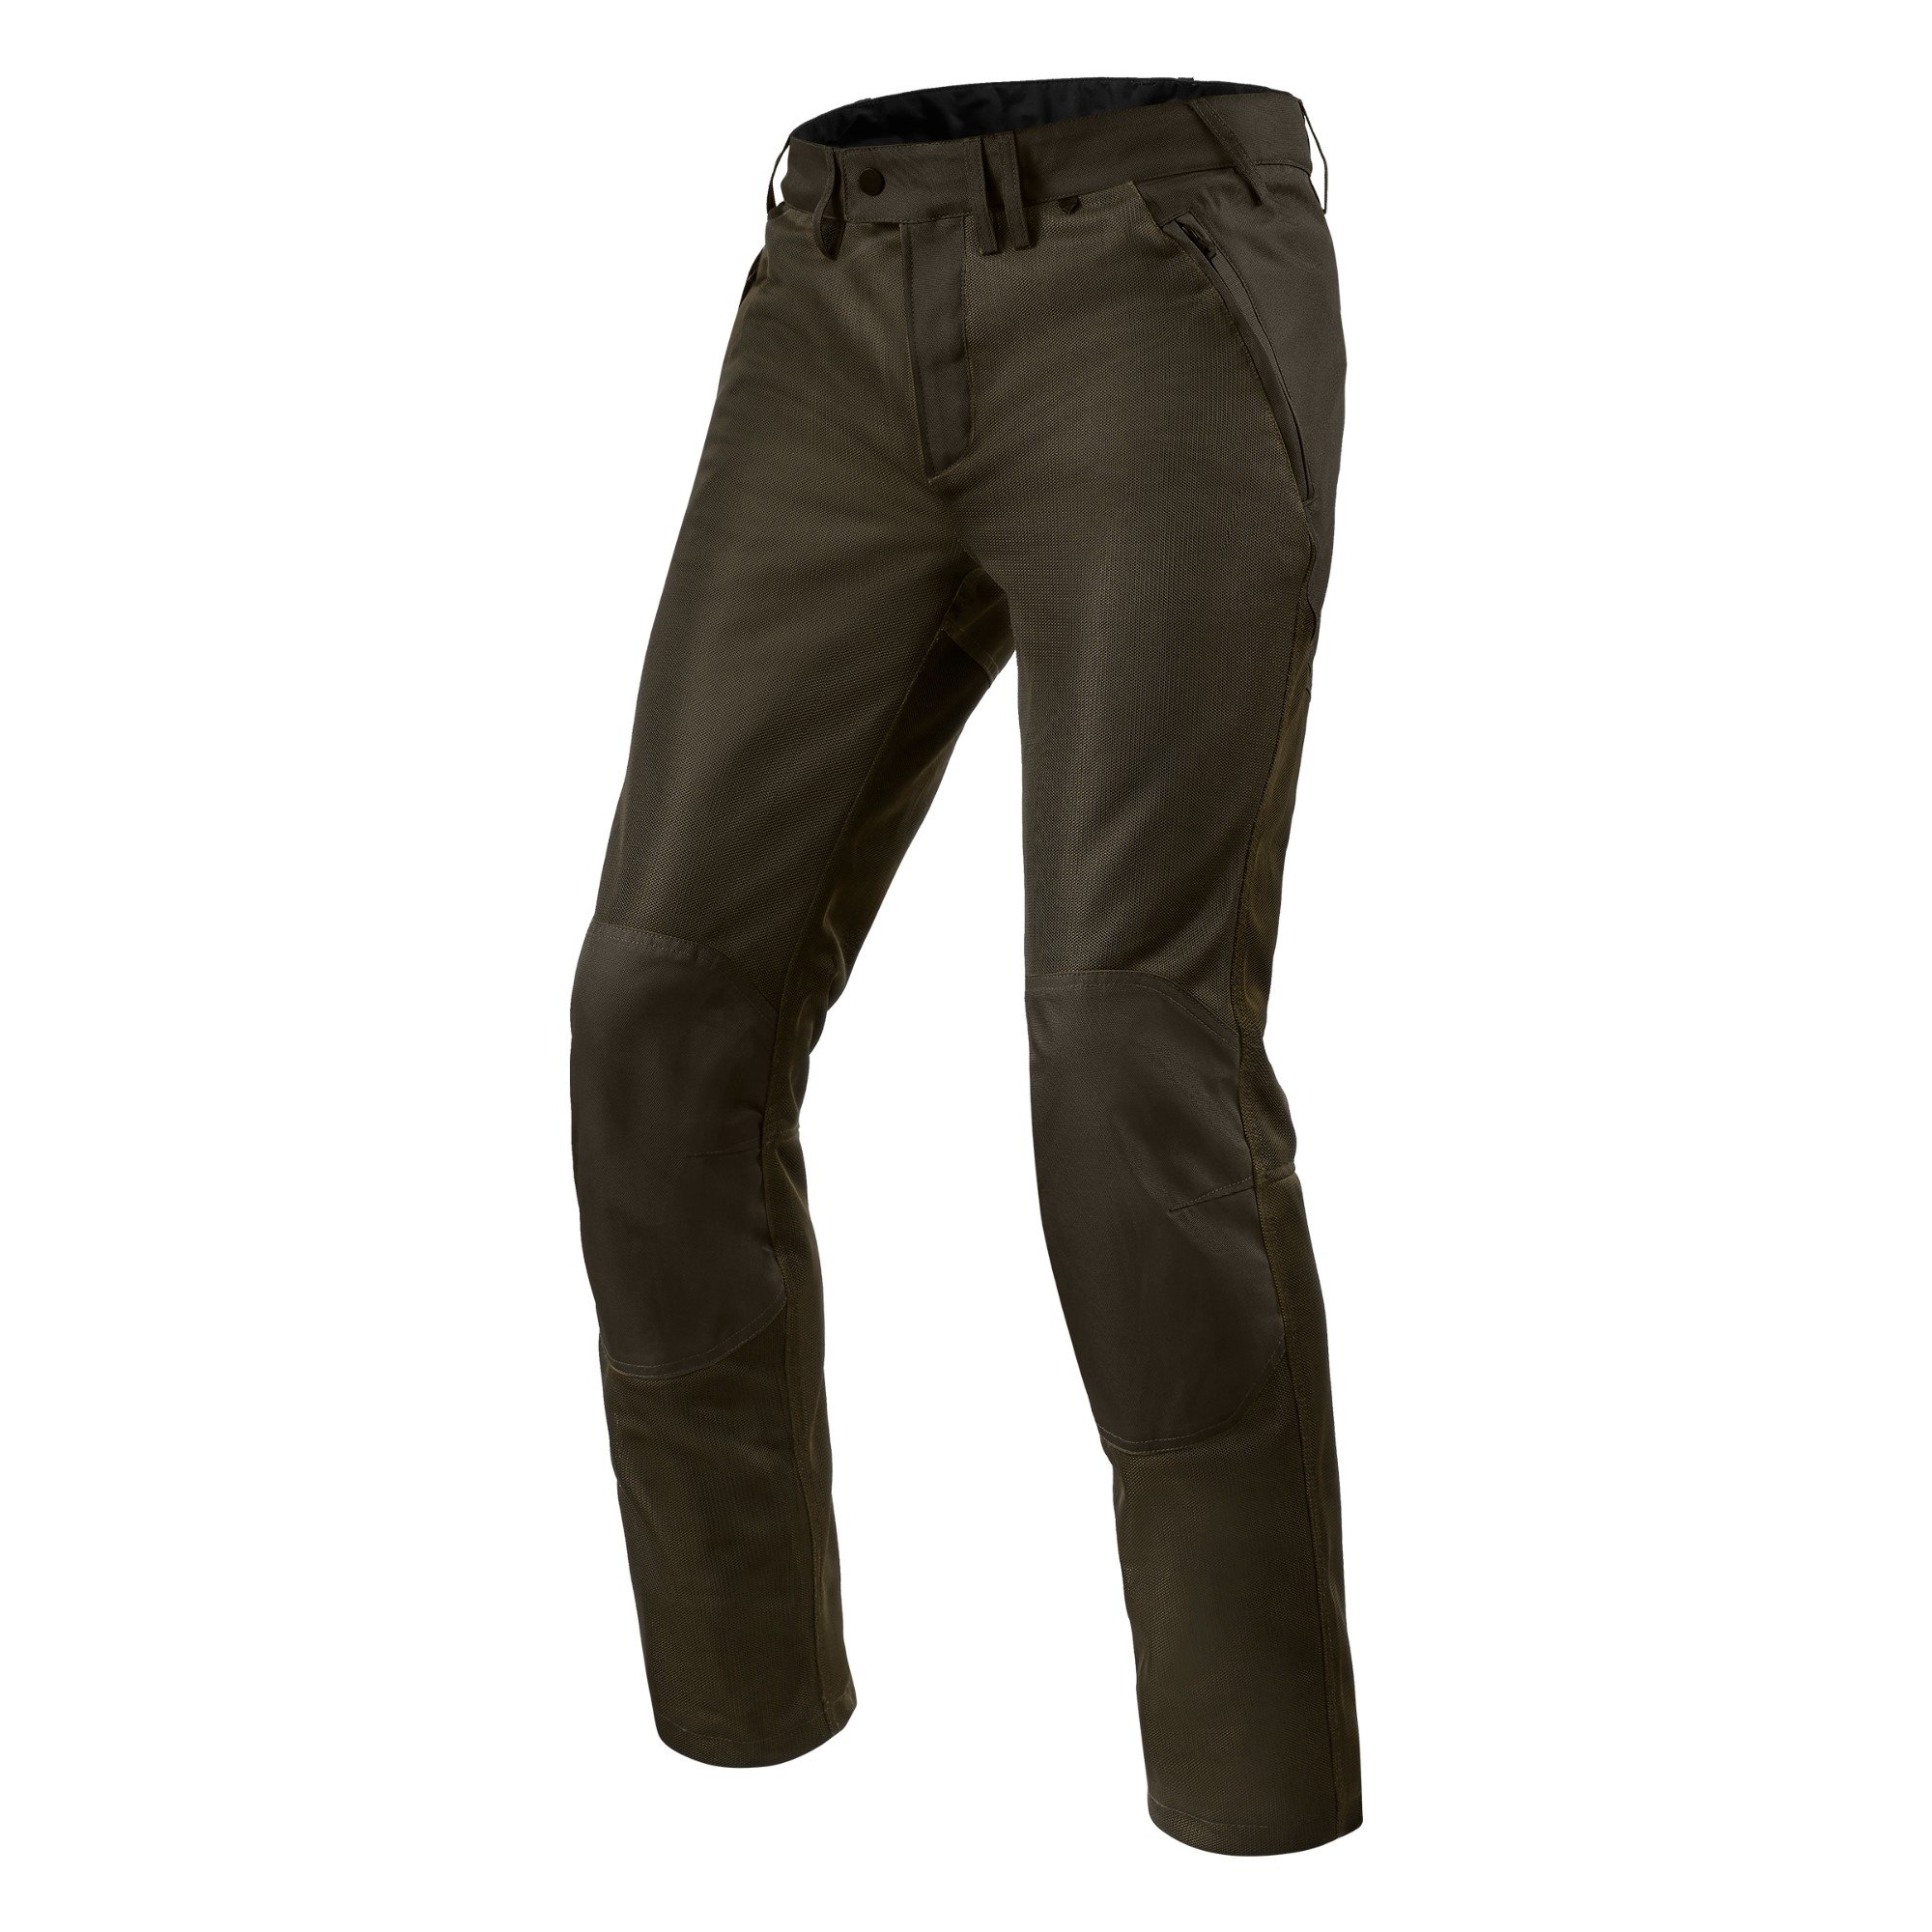 Image of REV'IT! Pants Eclipse 2 Black Olive Short Motorcycle Pants Size M ID 8700001368797